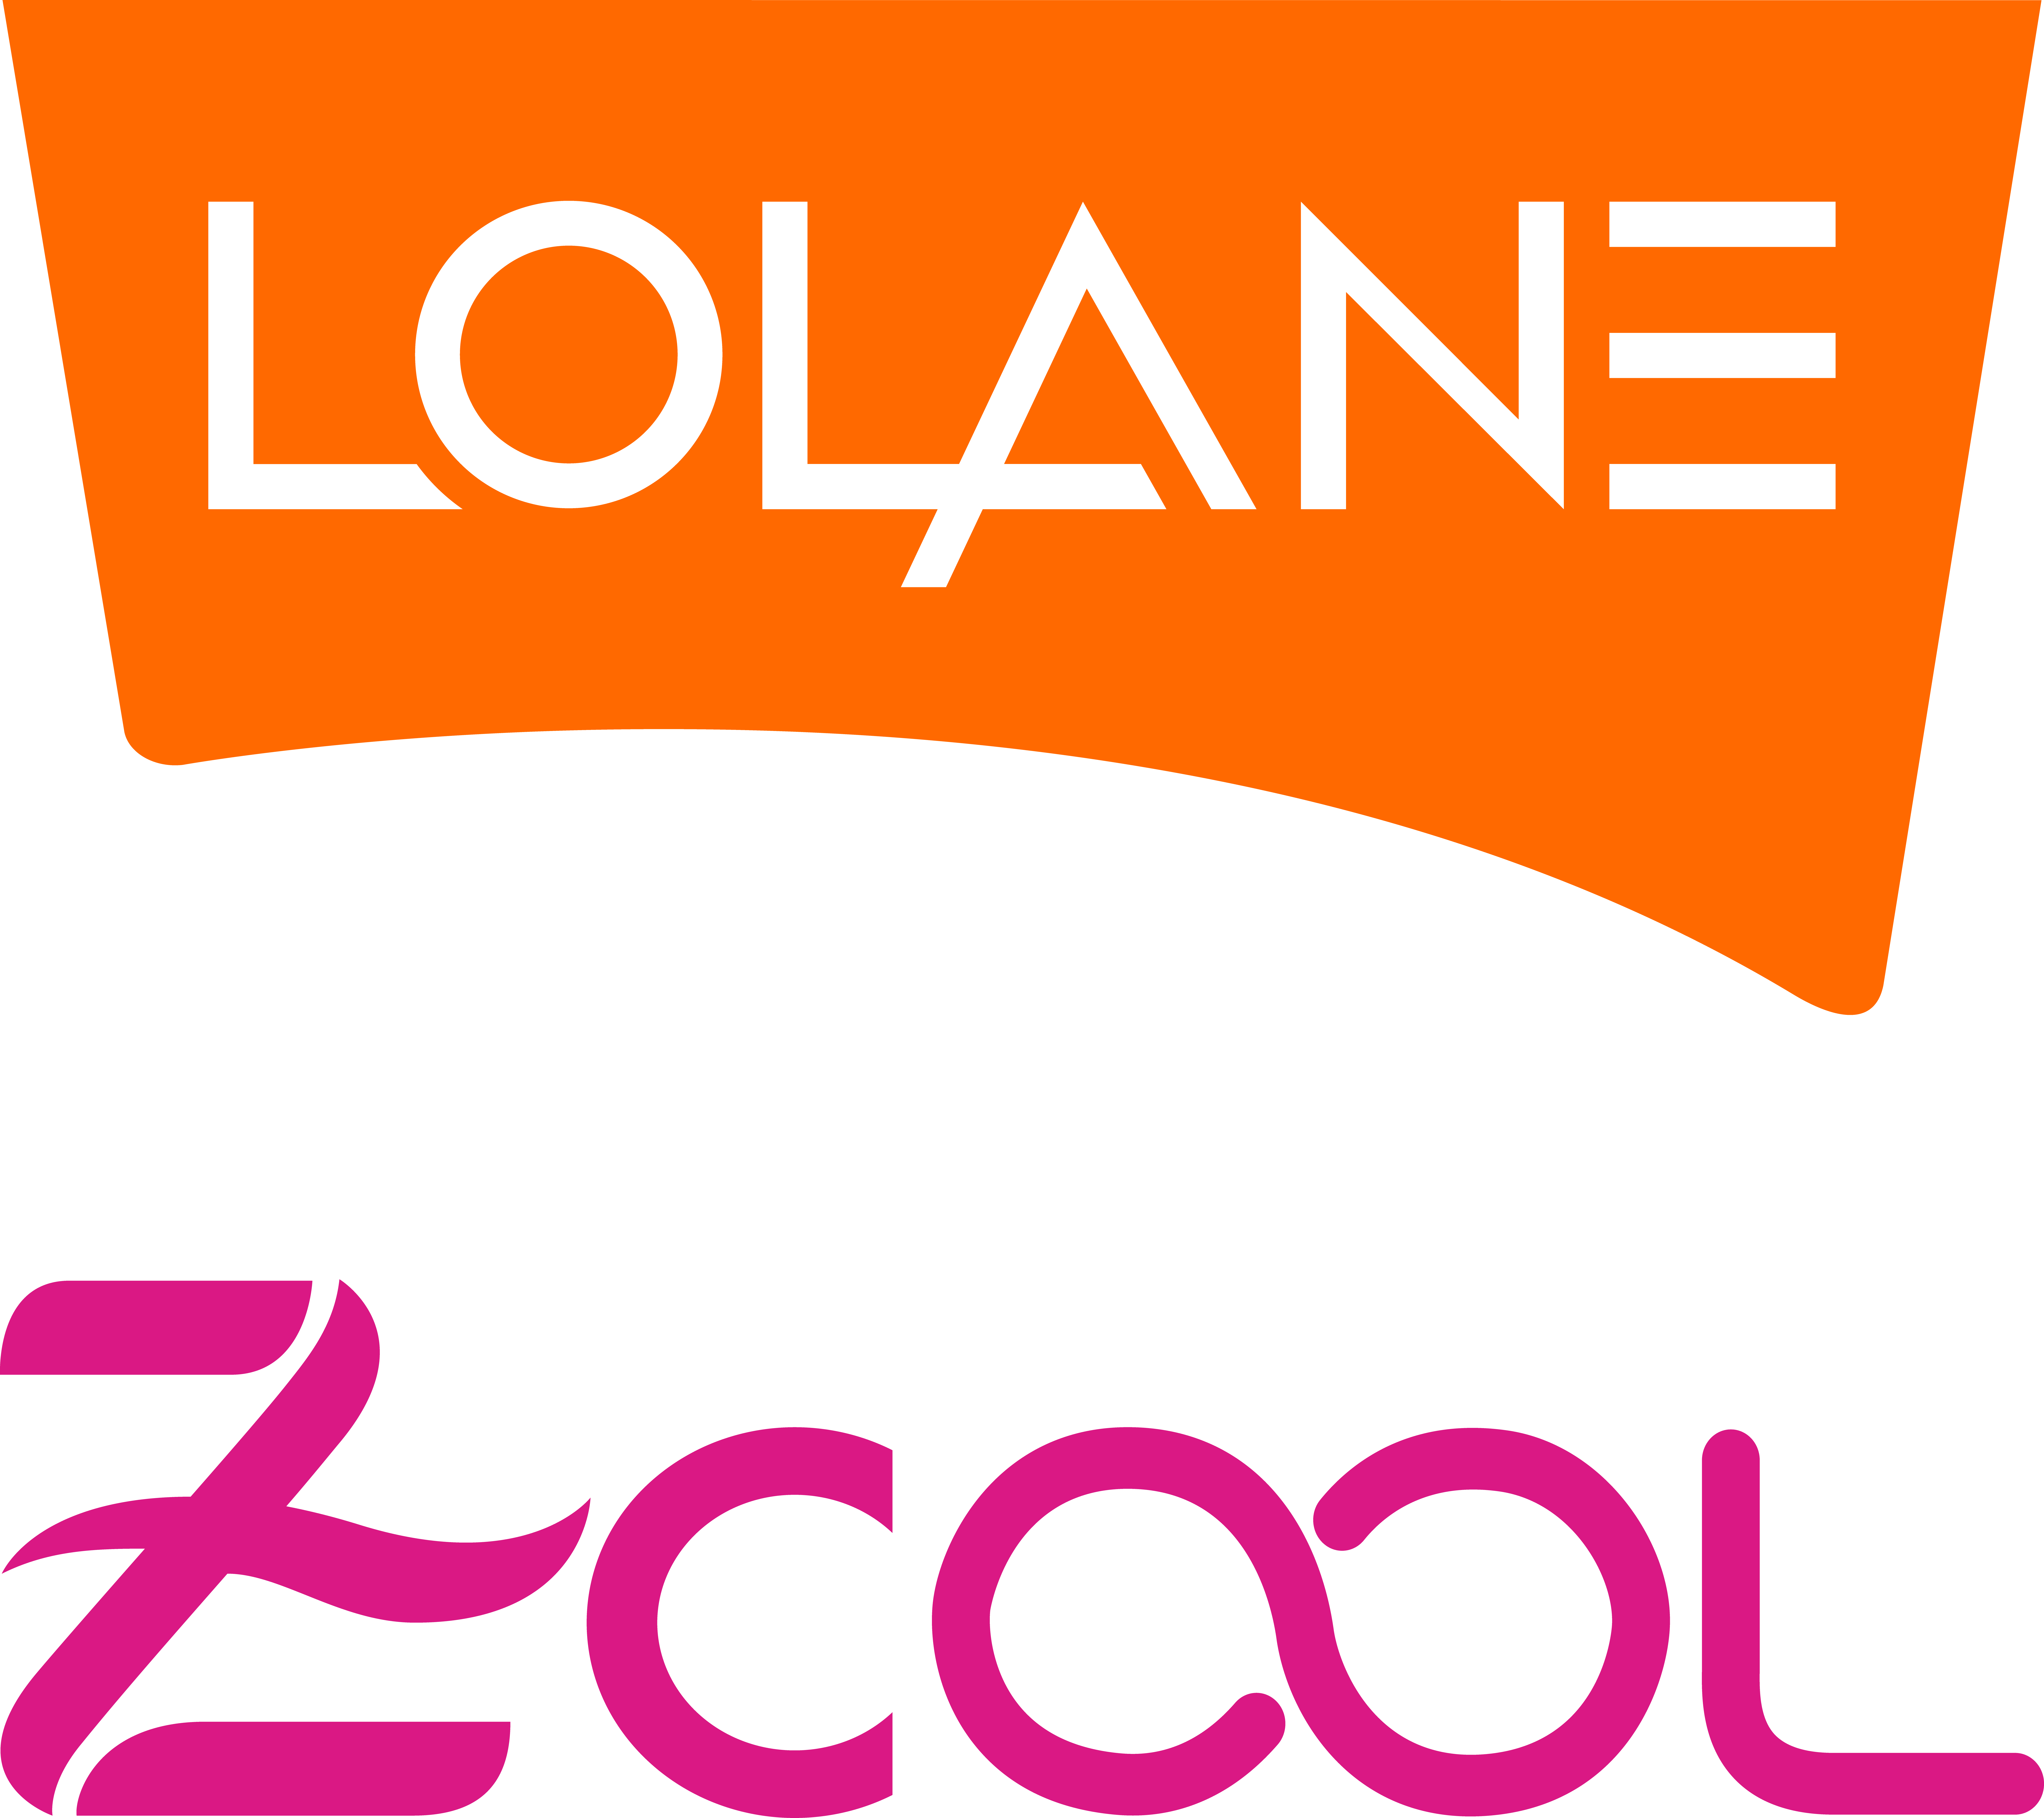 https://image.sistacafe.com/images/uploads/review/brand/Lolane_z_cool_logo.png